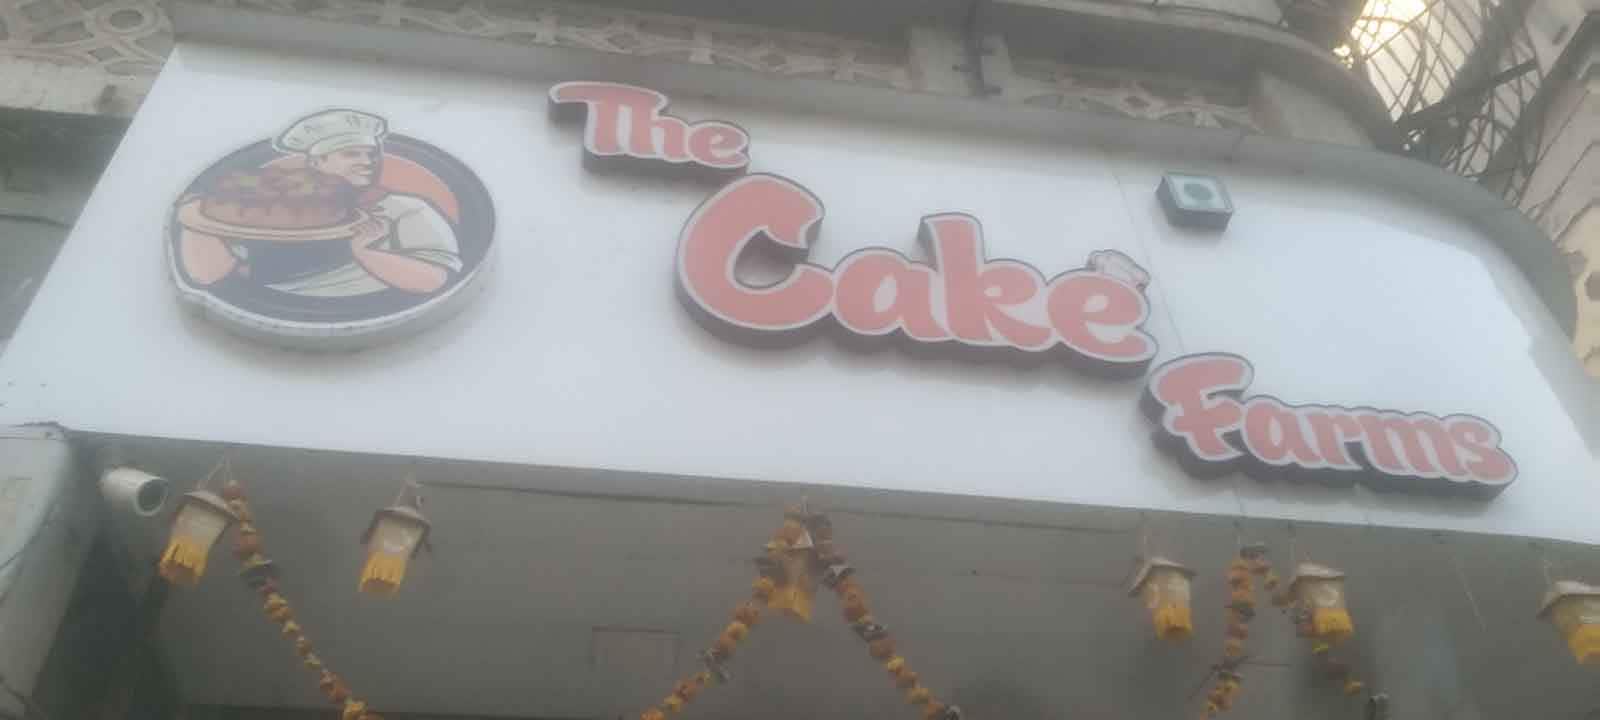 Reviews of Bake For Me Cake Shop, Kharghar, Navi Mumbai | Zomato